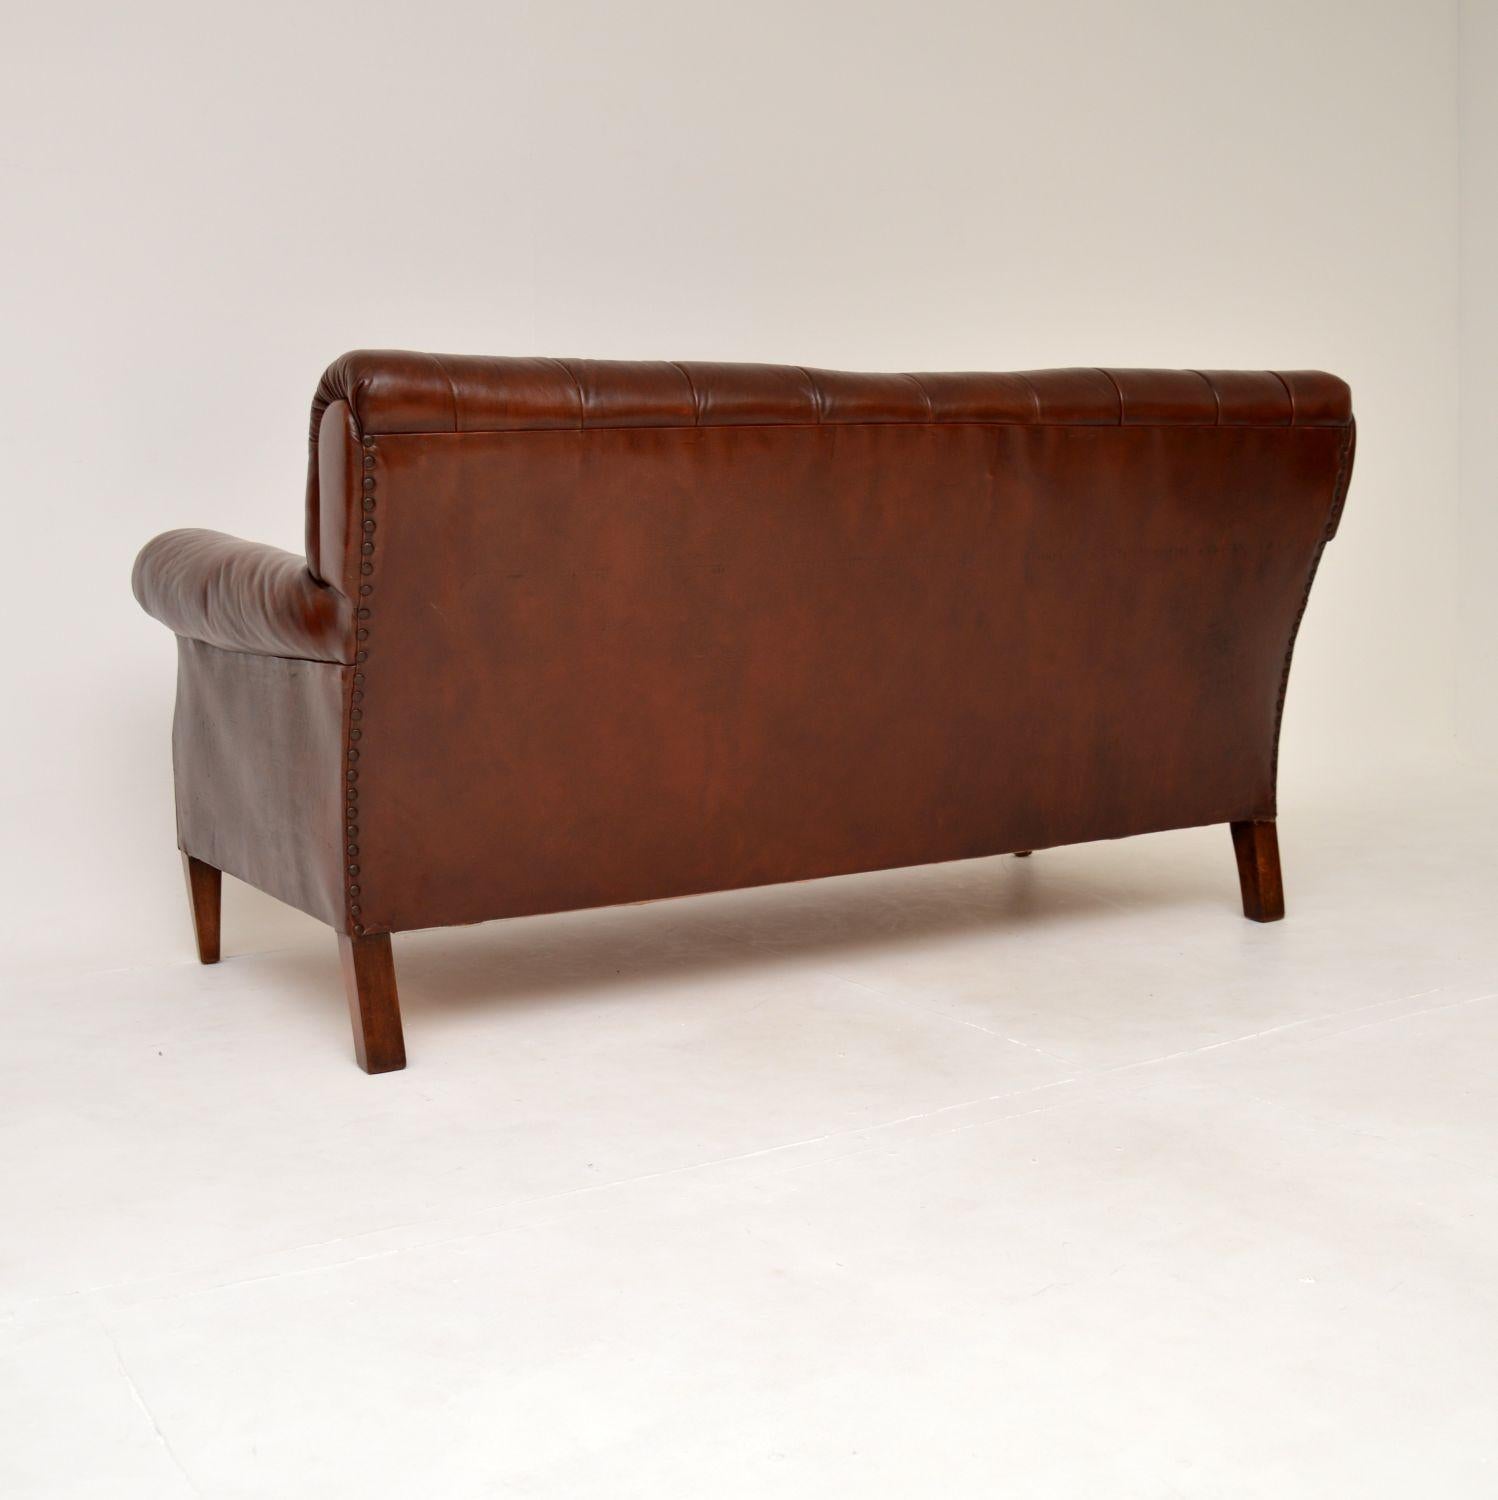 Early 20th Century Antique Swedish Leather Sofa